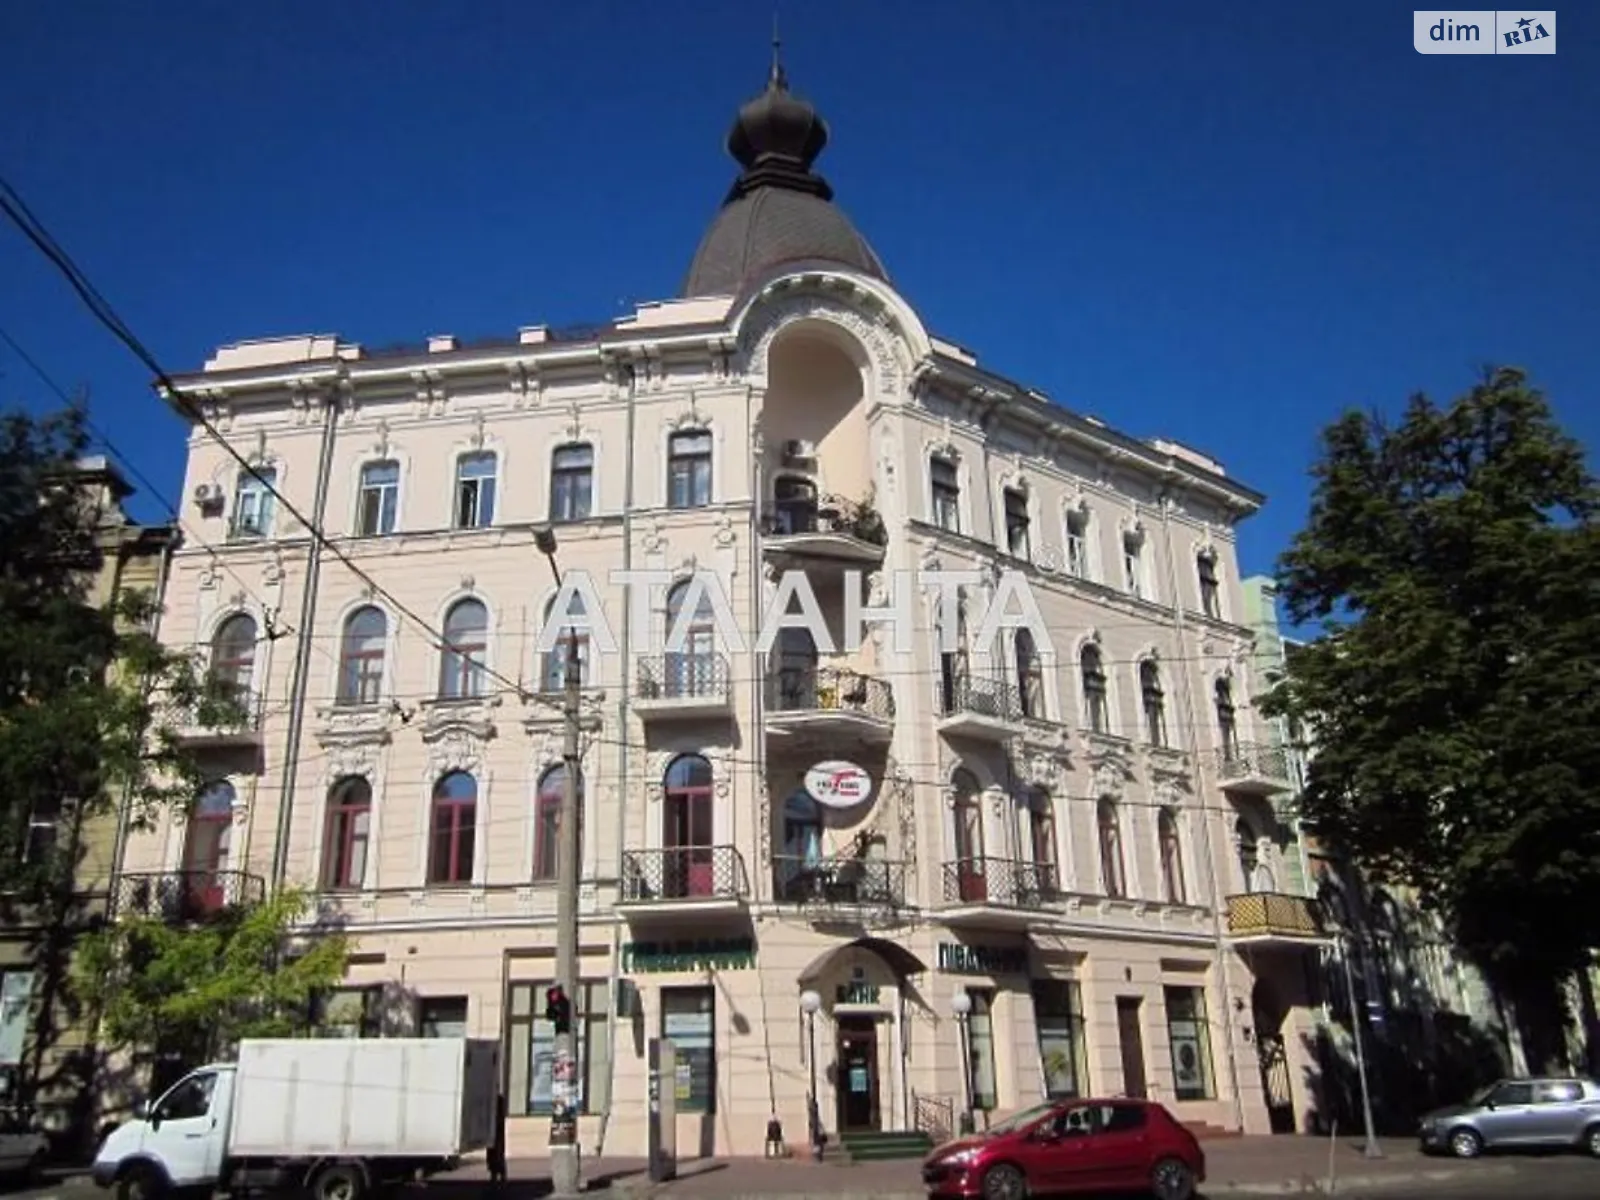 Продается комната 22 кв. м в Одессе, цена: 15000 $ - фото 1